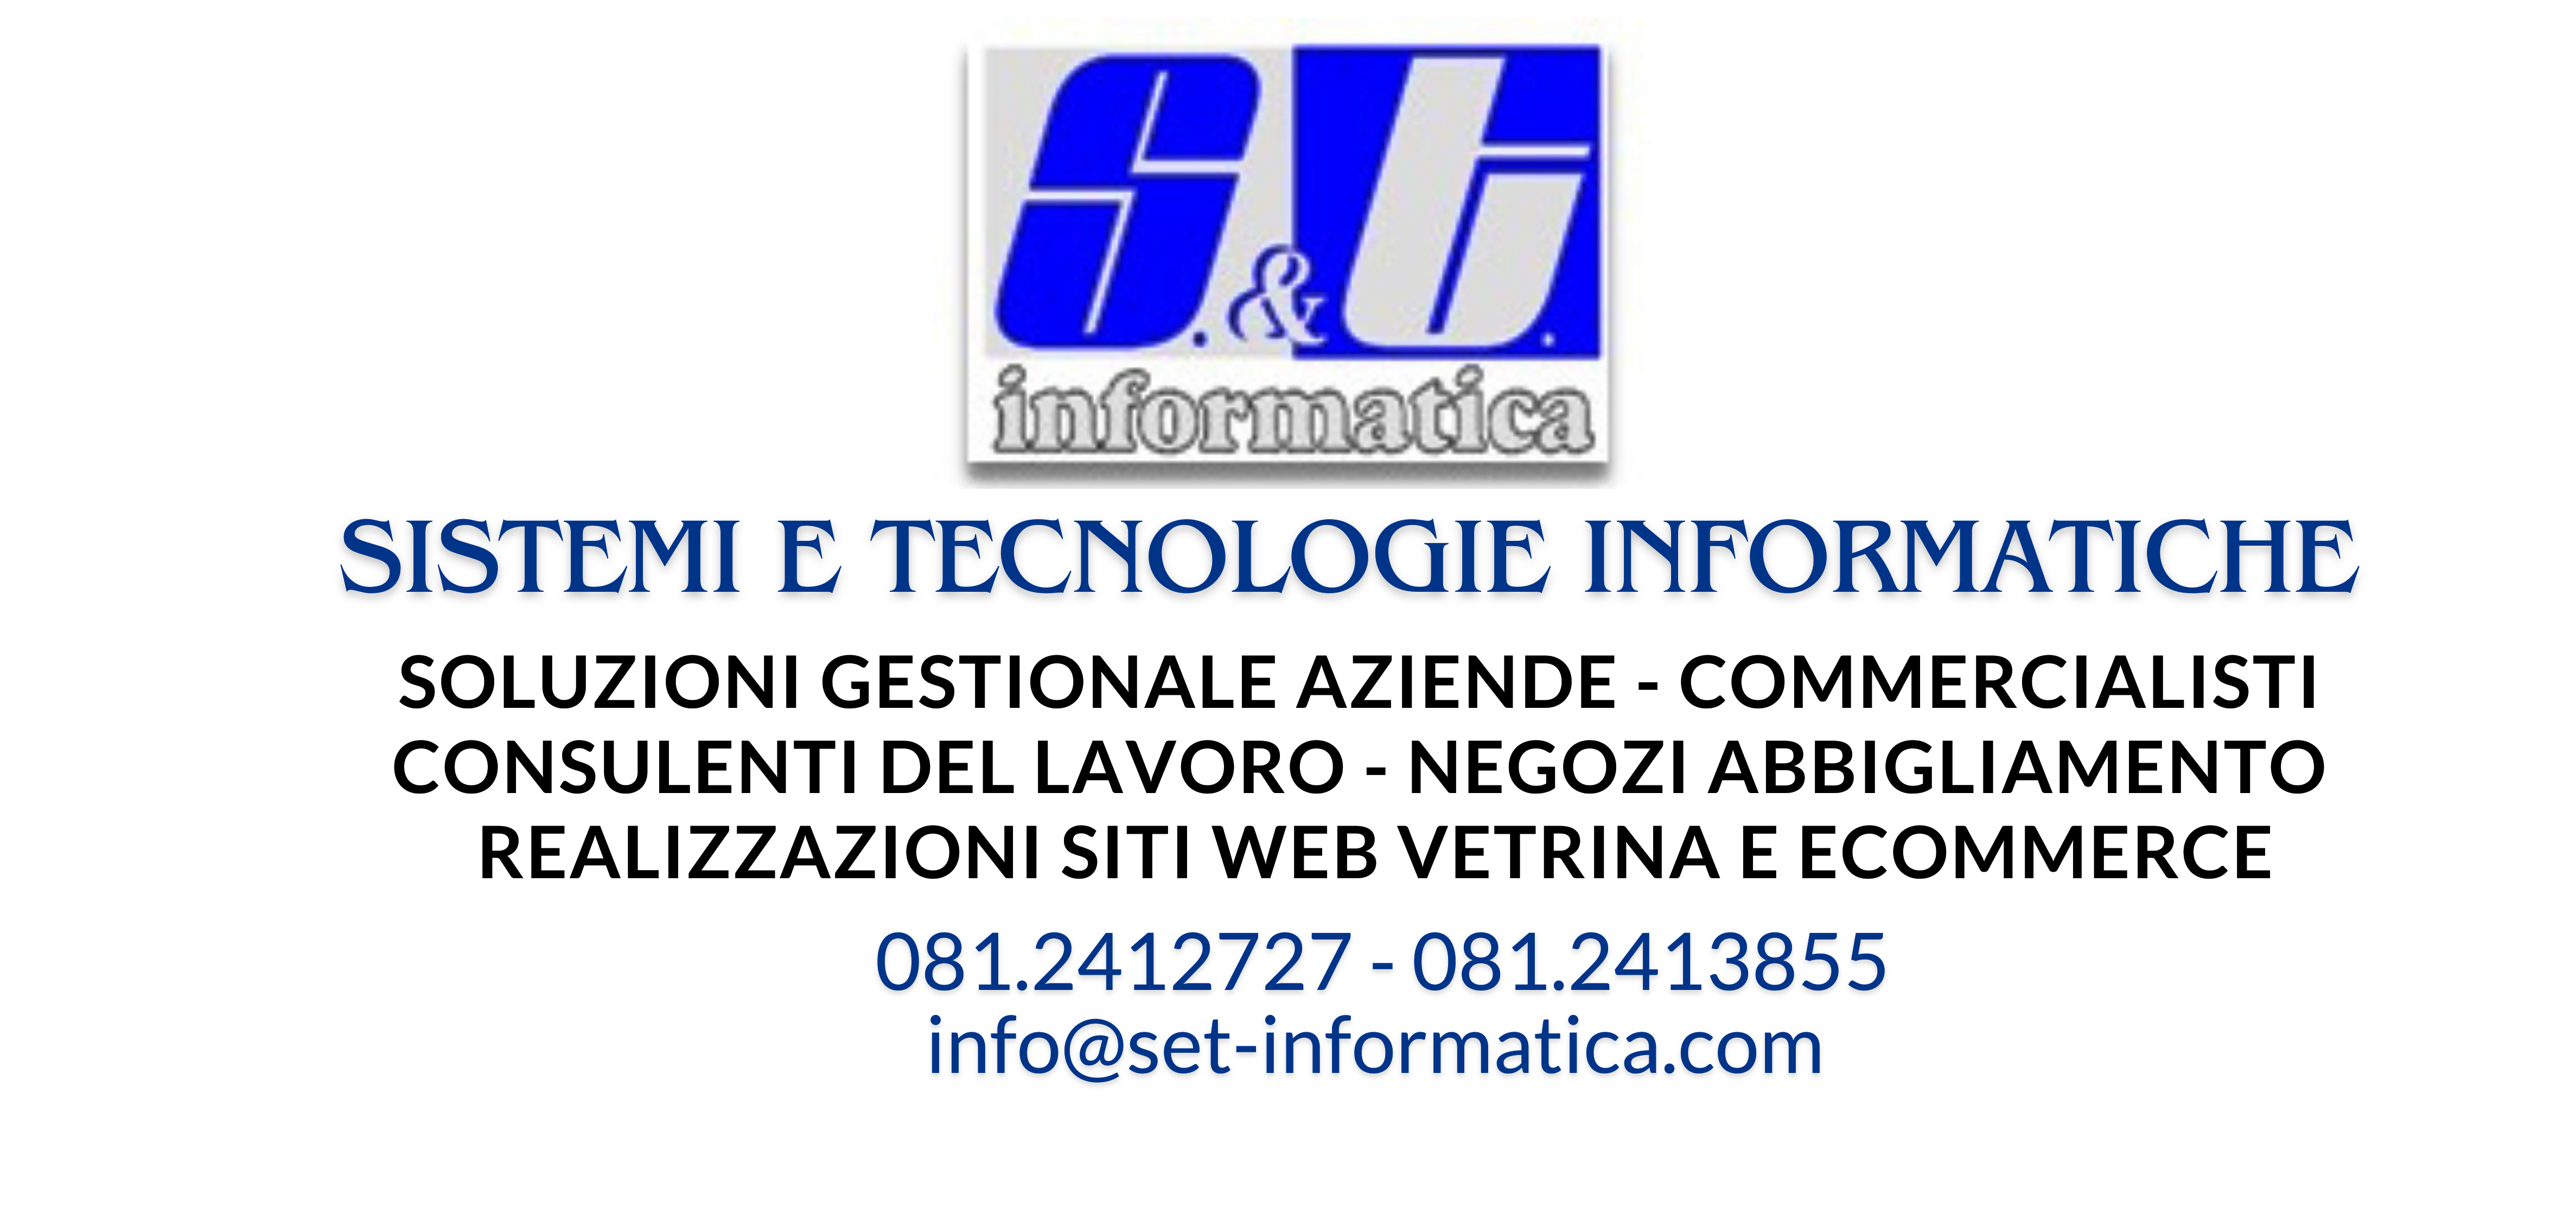 S.&T. Informatica